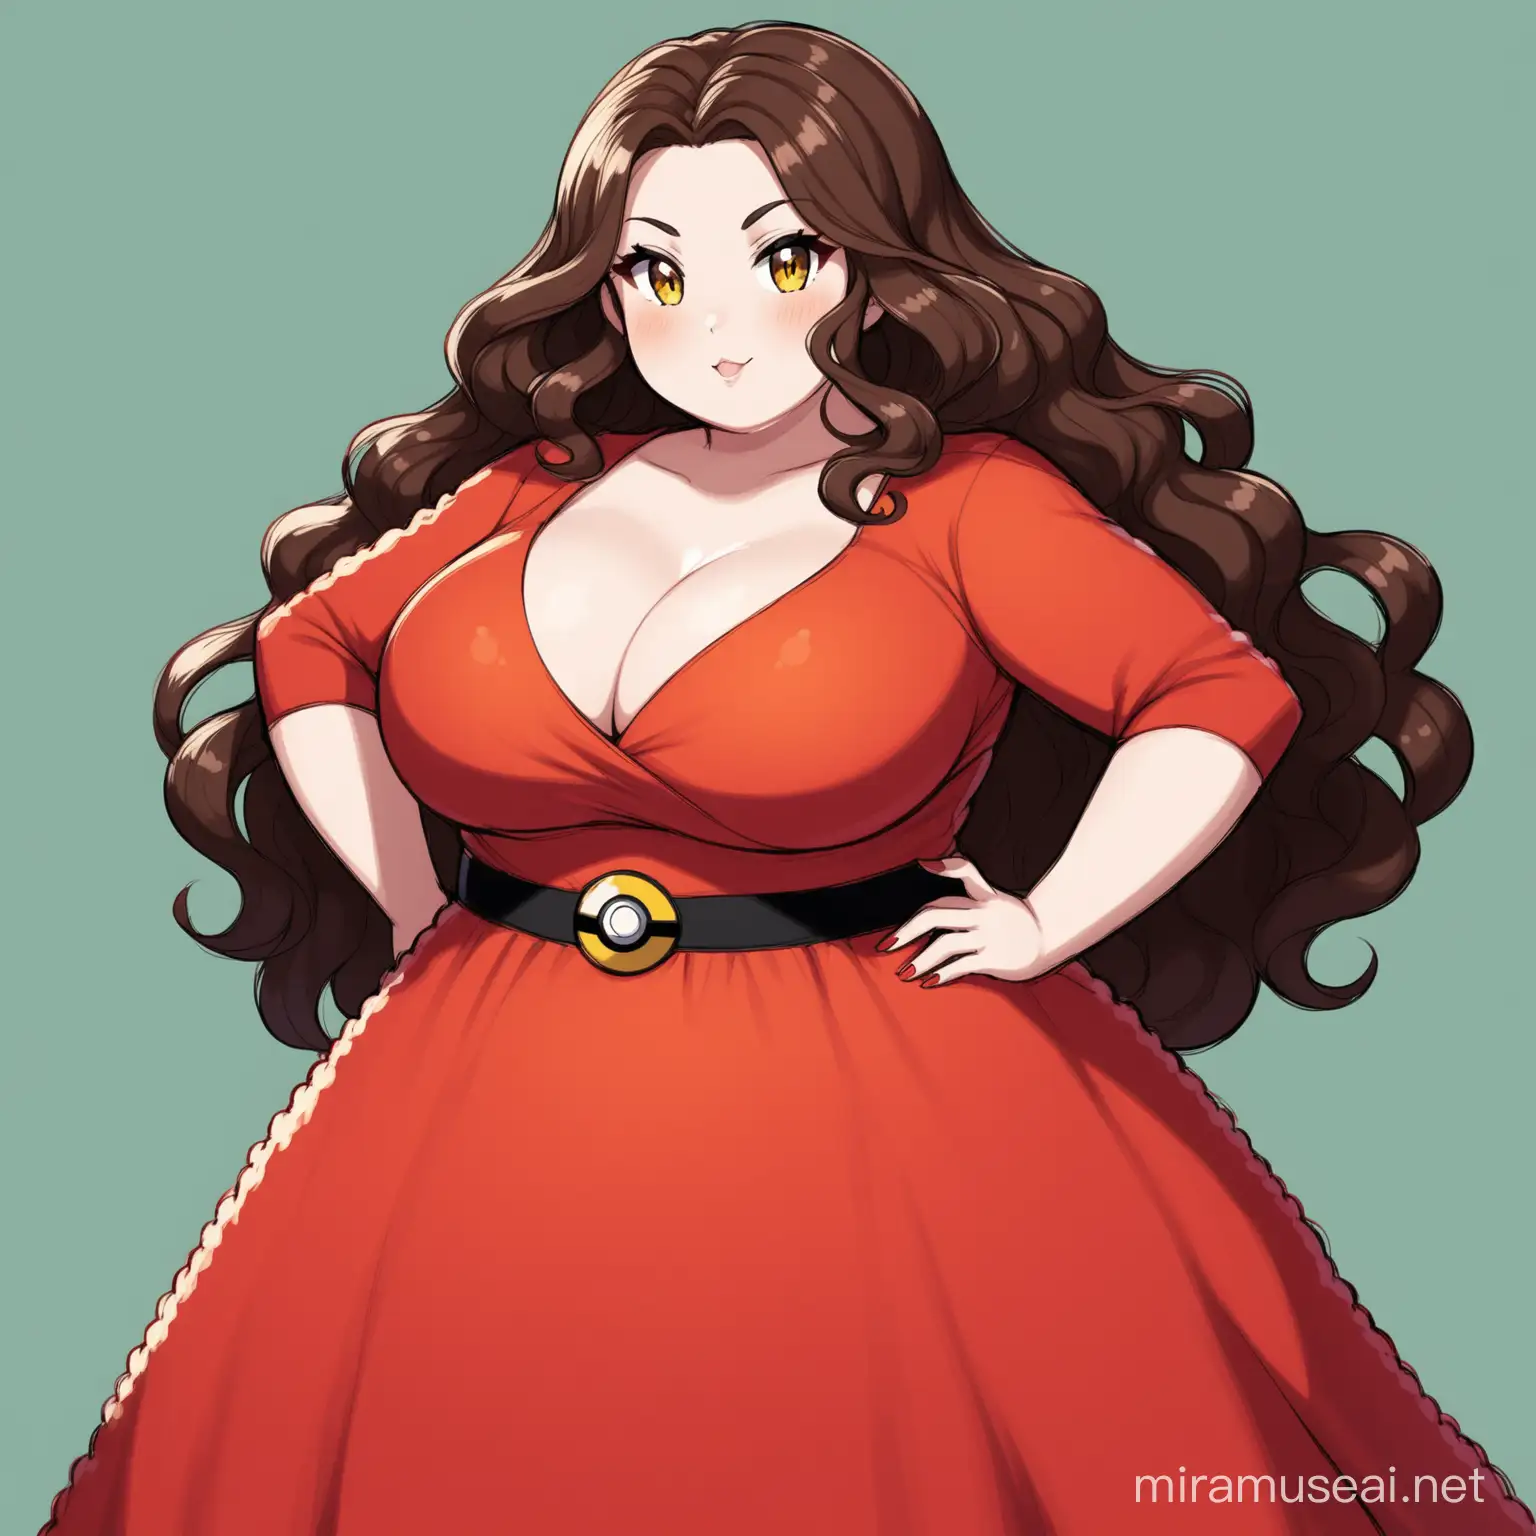 Plus sized woman, pokemon style, dark brown wavy hair, golden eyes, red dress